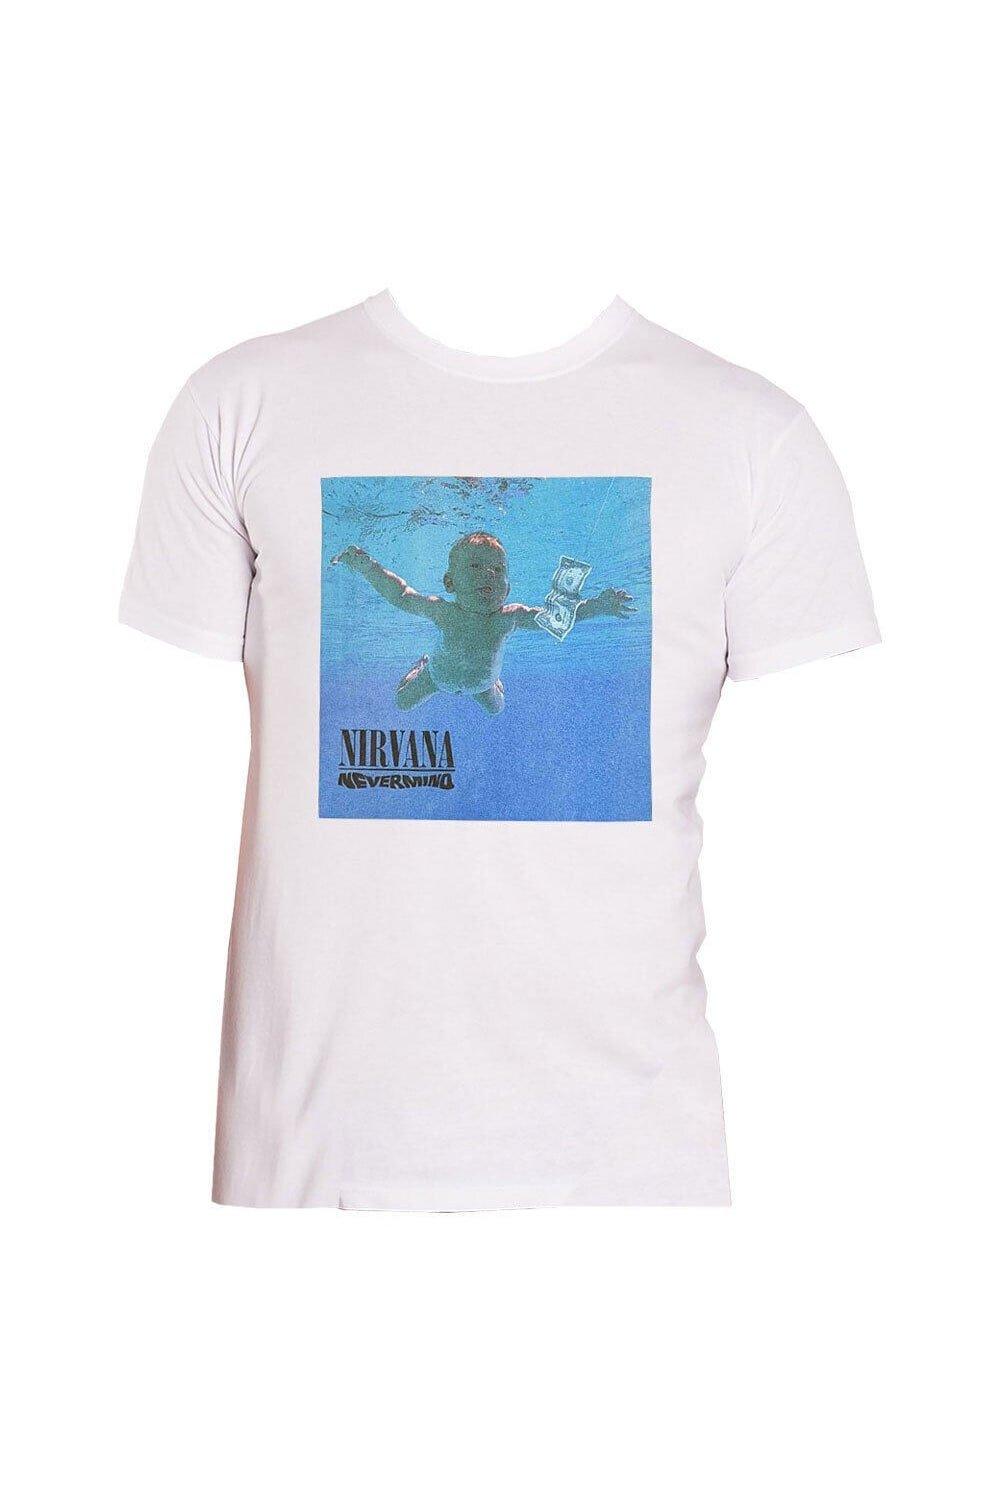 Хлопковая футболка Nevermind Album Nirvana, белый